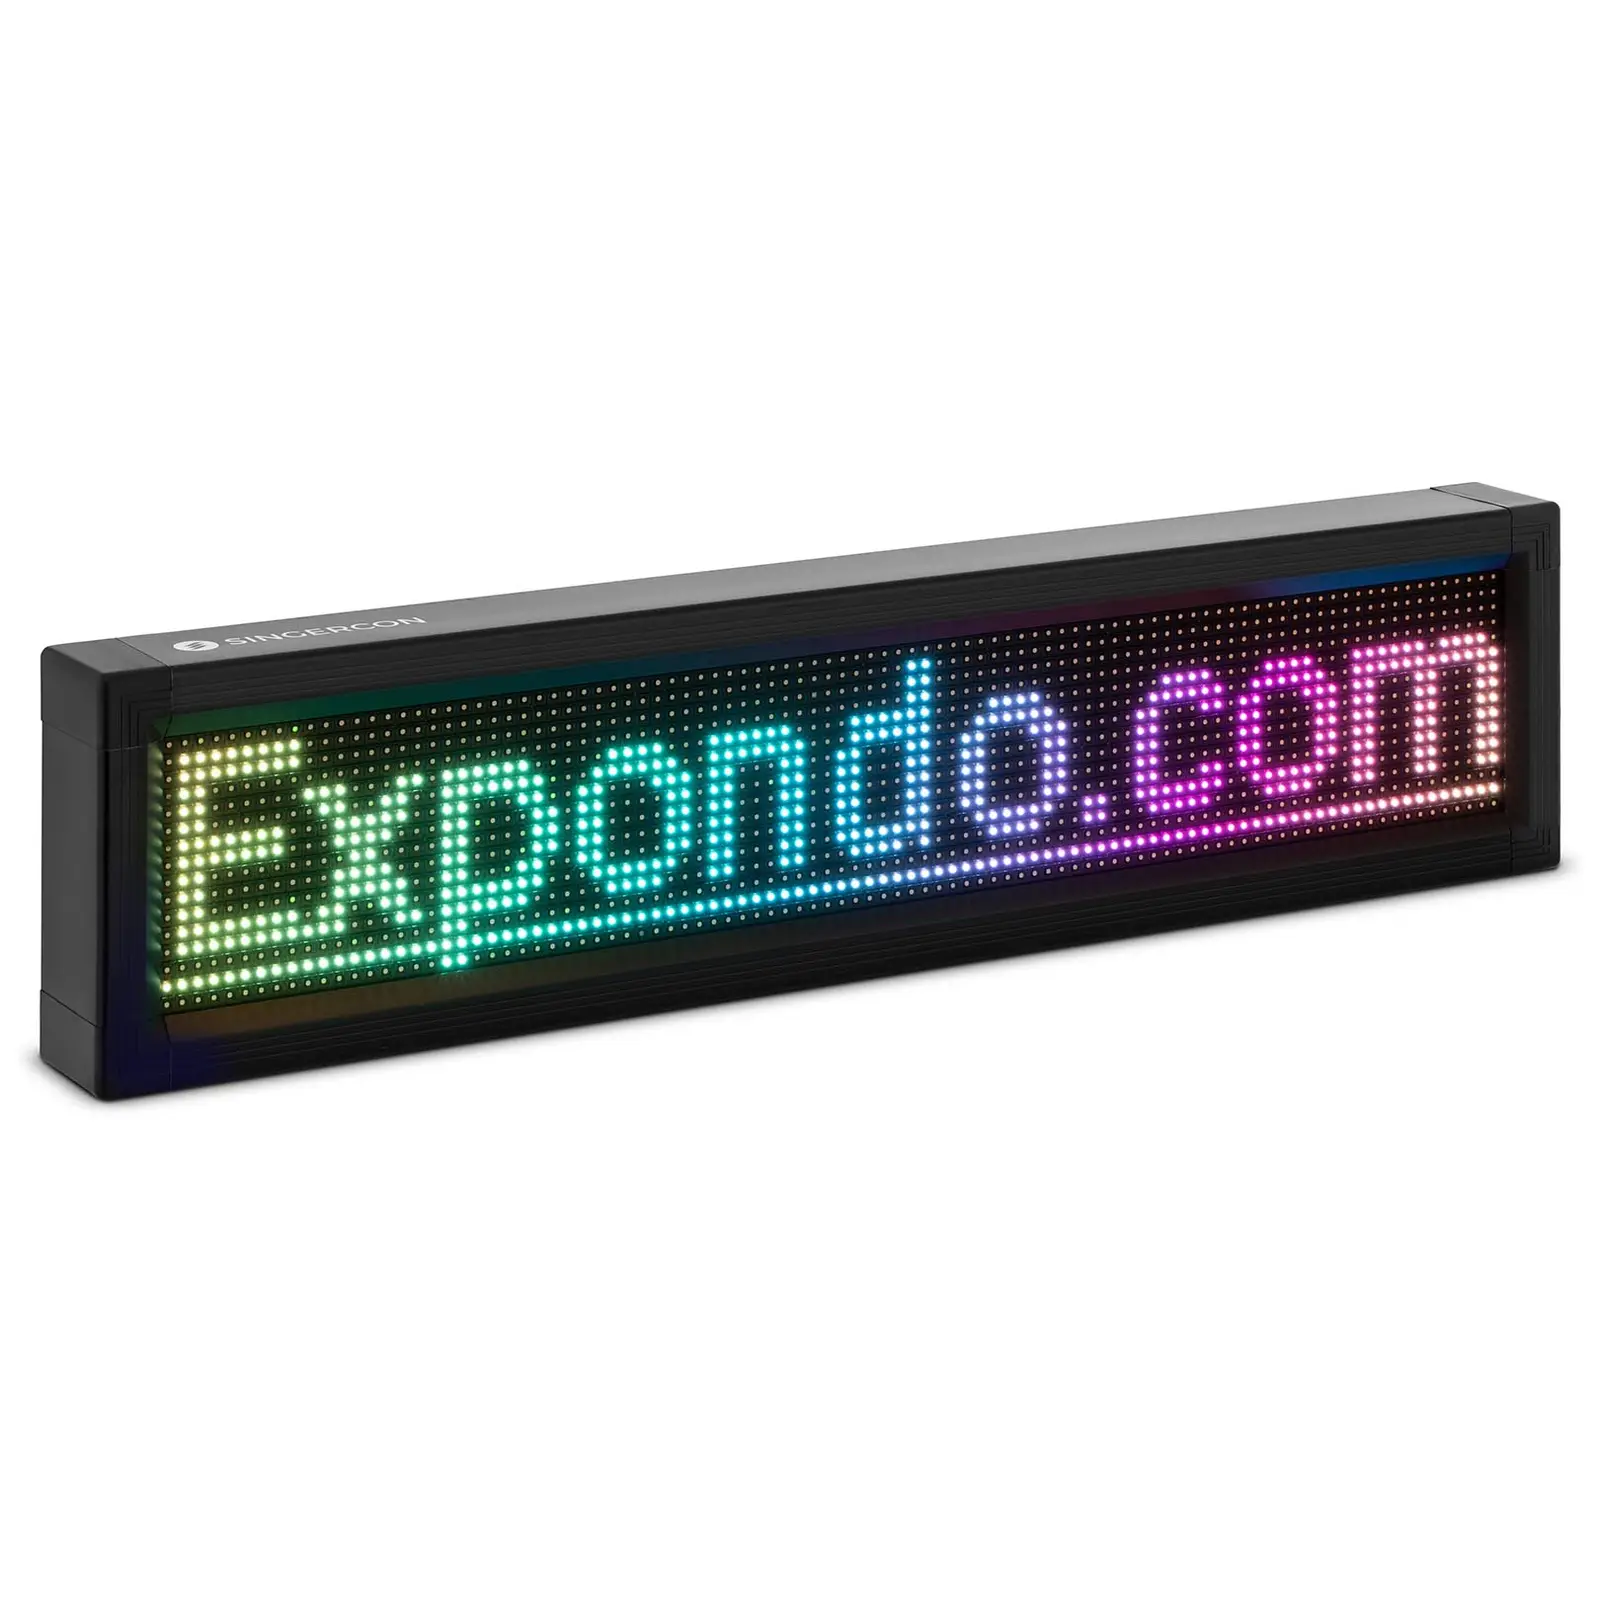 Scritta LED - 96 x 16 LED colorati - 67 x 19 cm - Programmabile